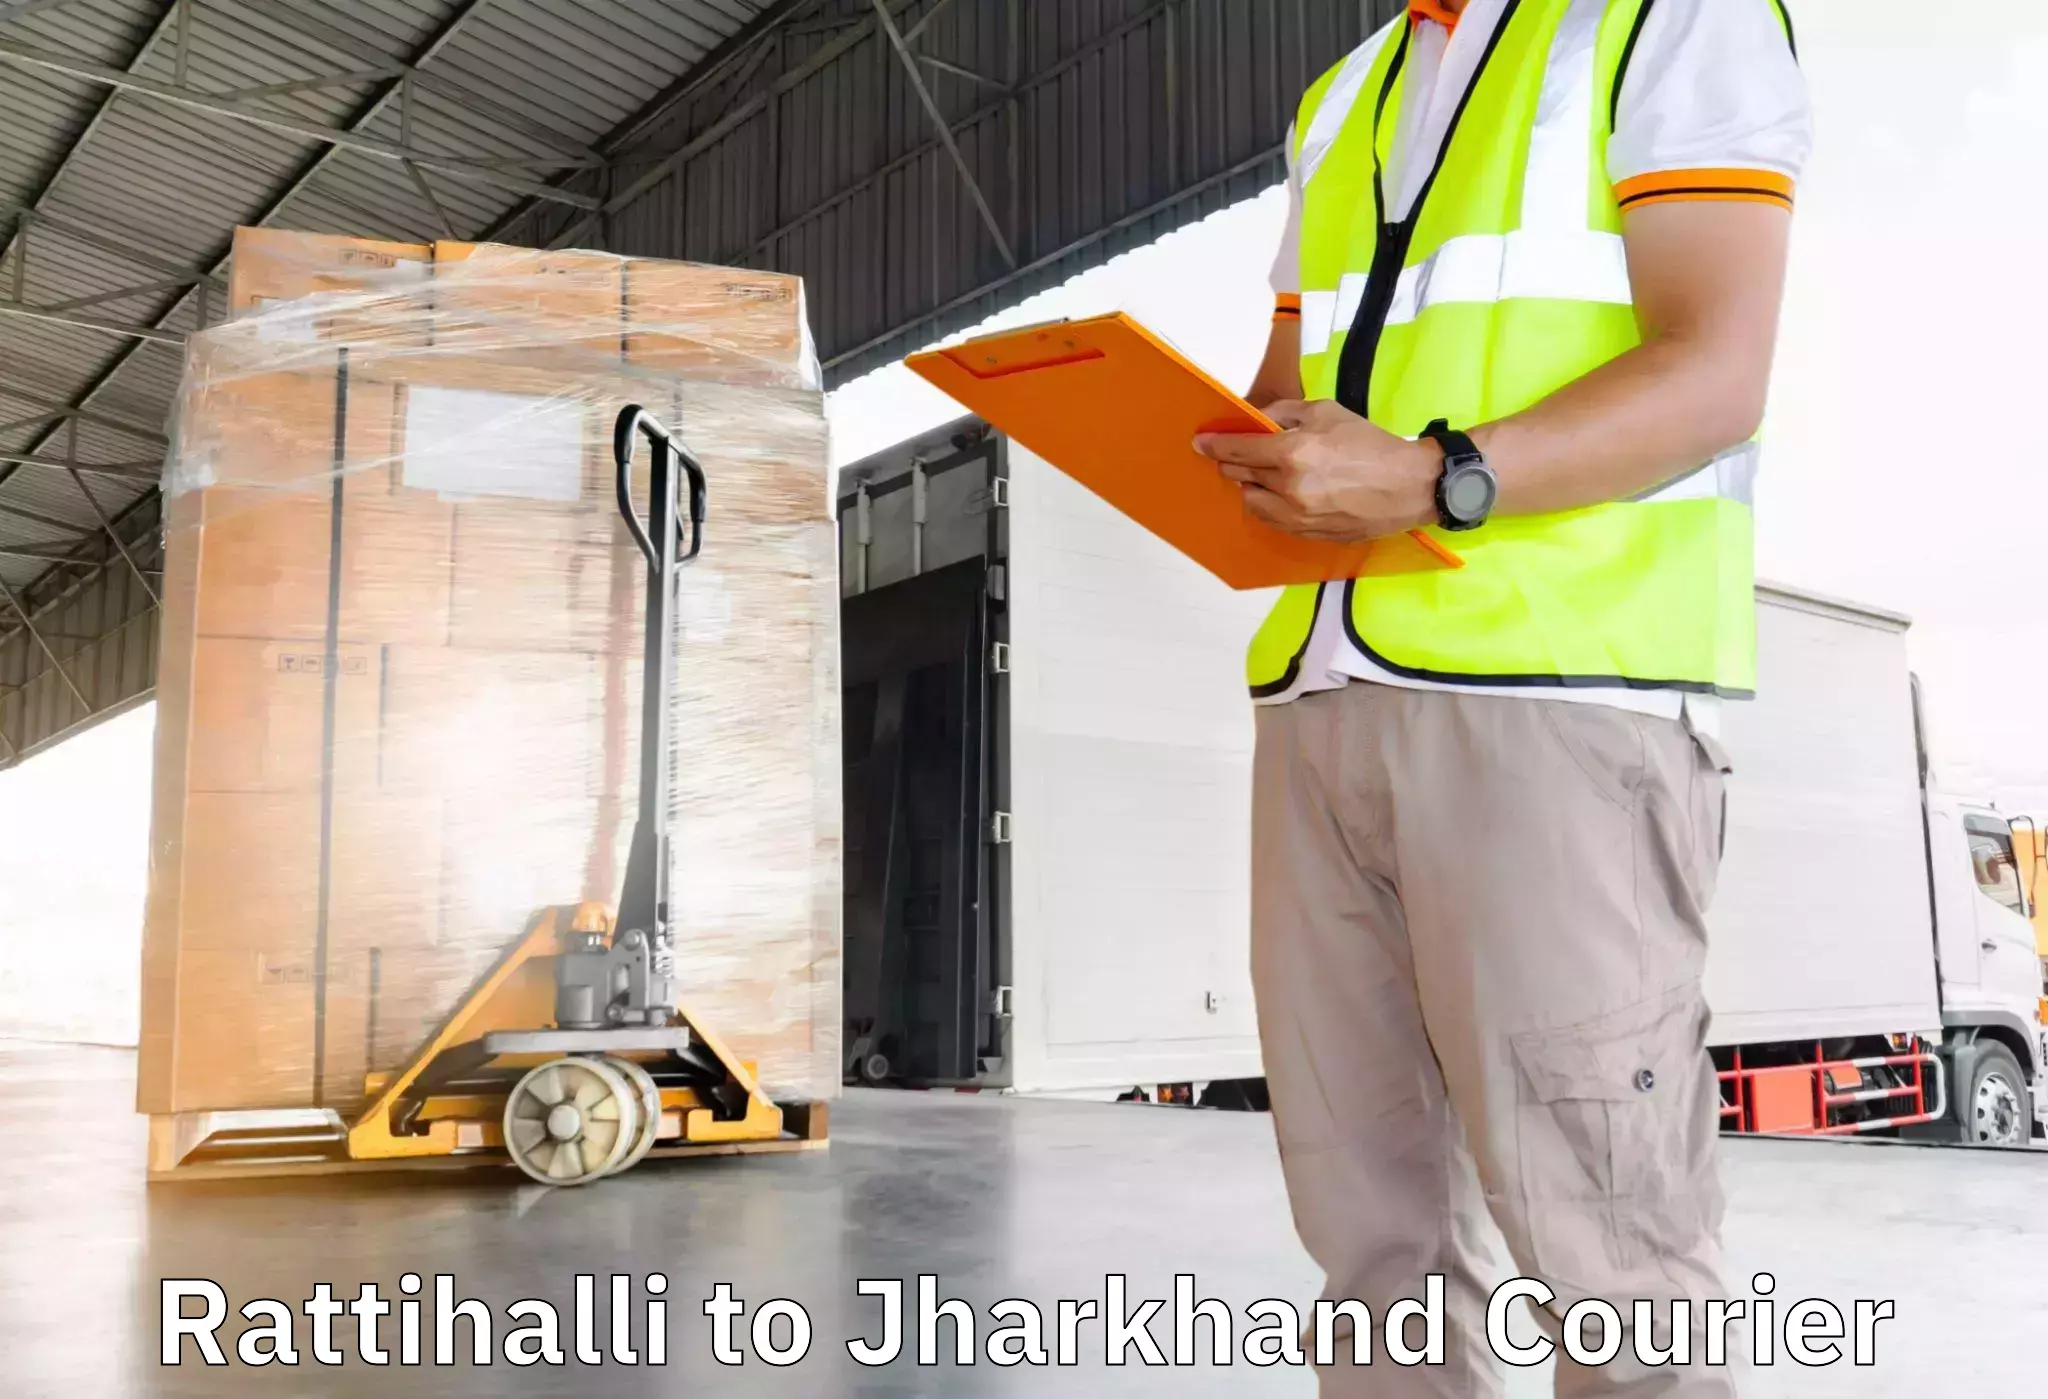 Efficient moving company Rattihalli to Bundu